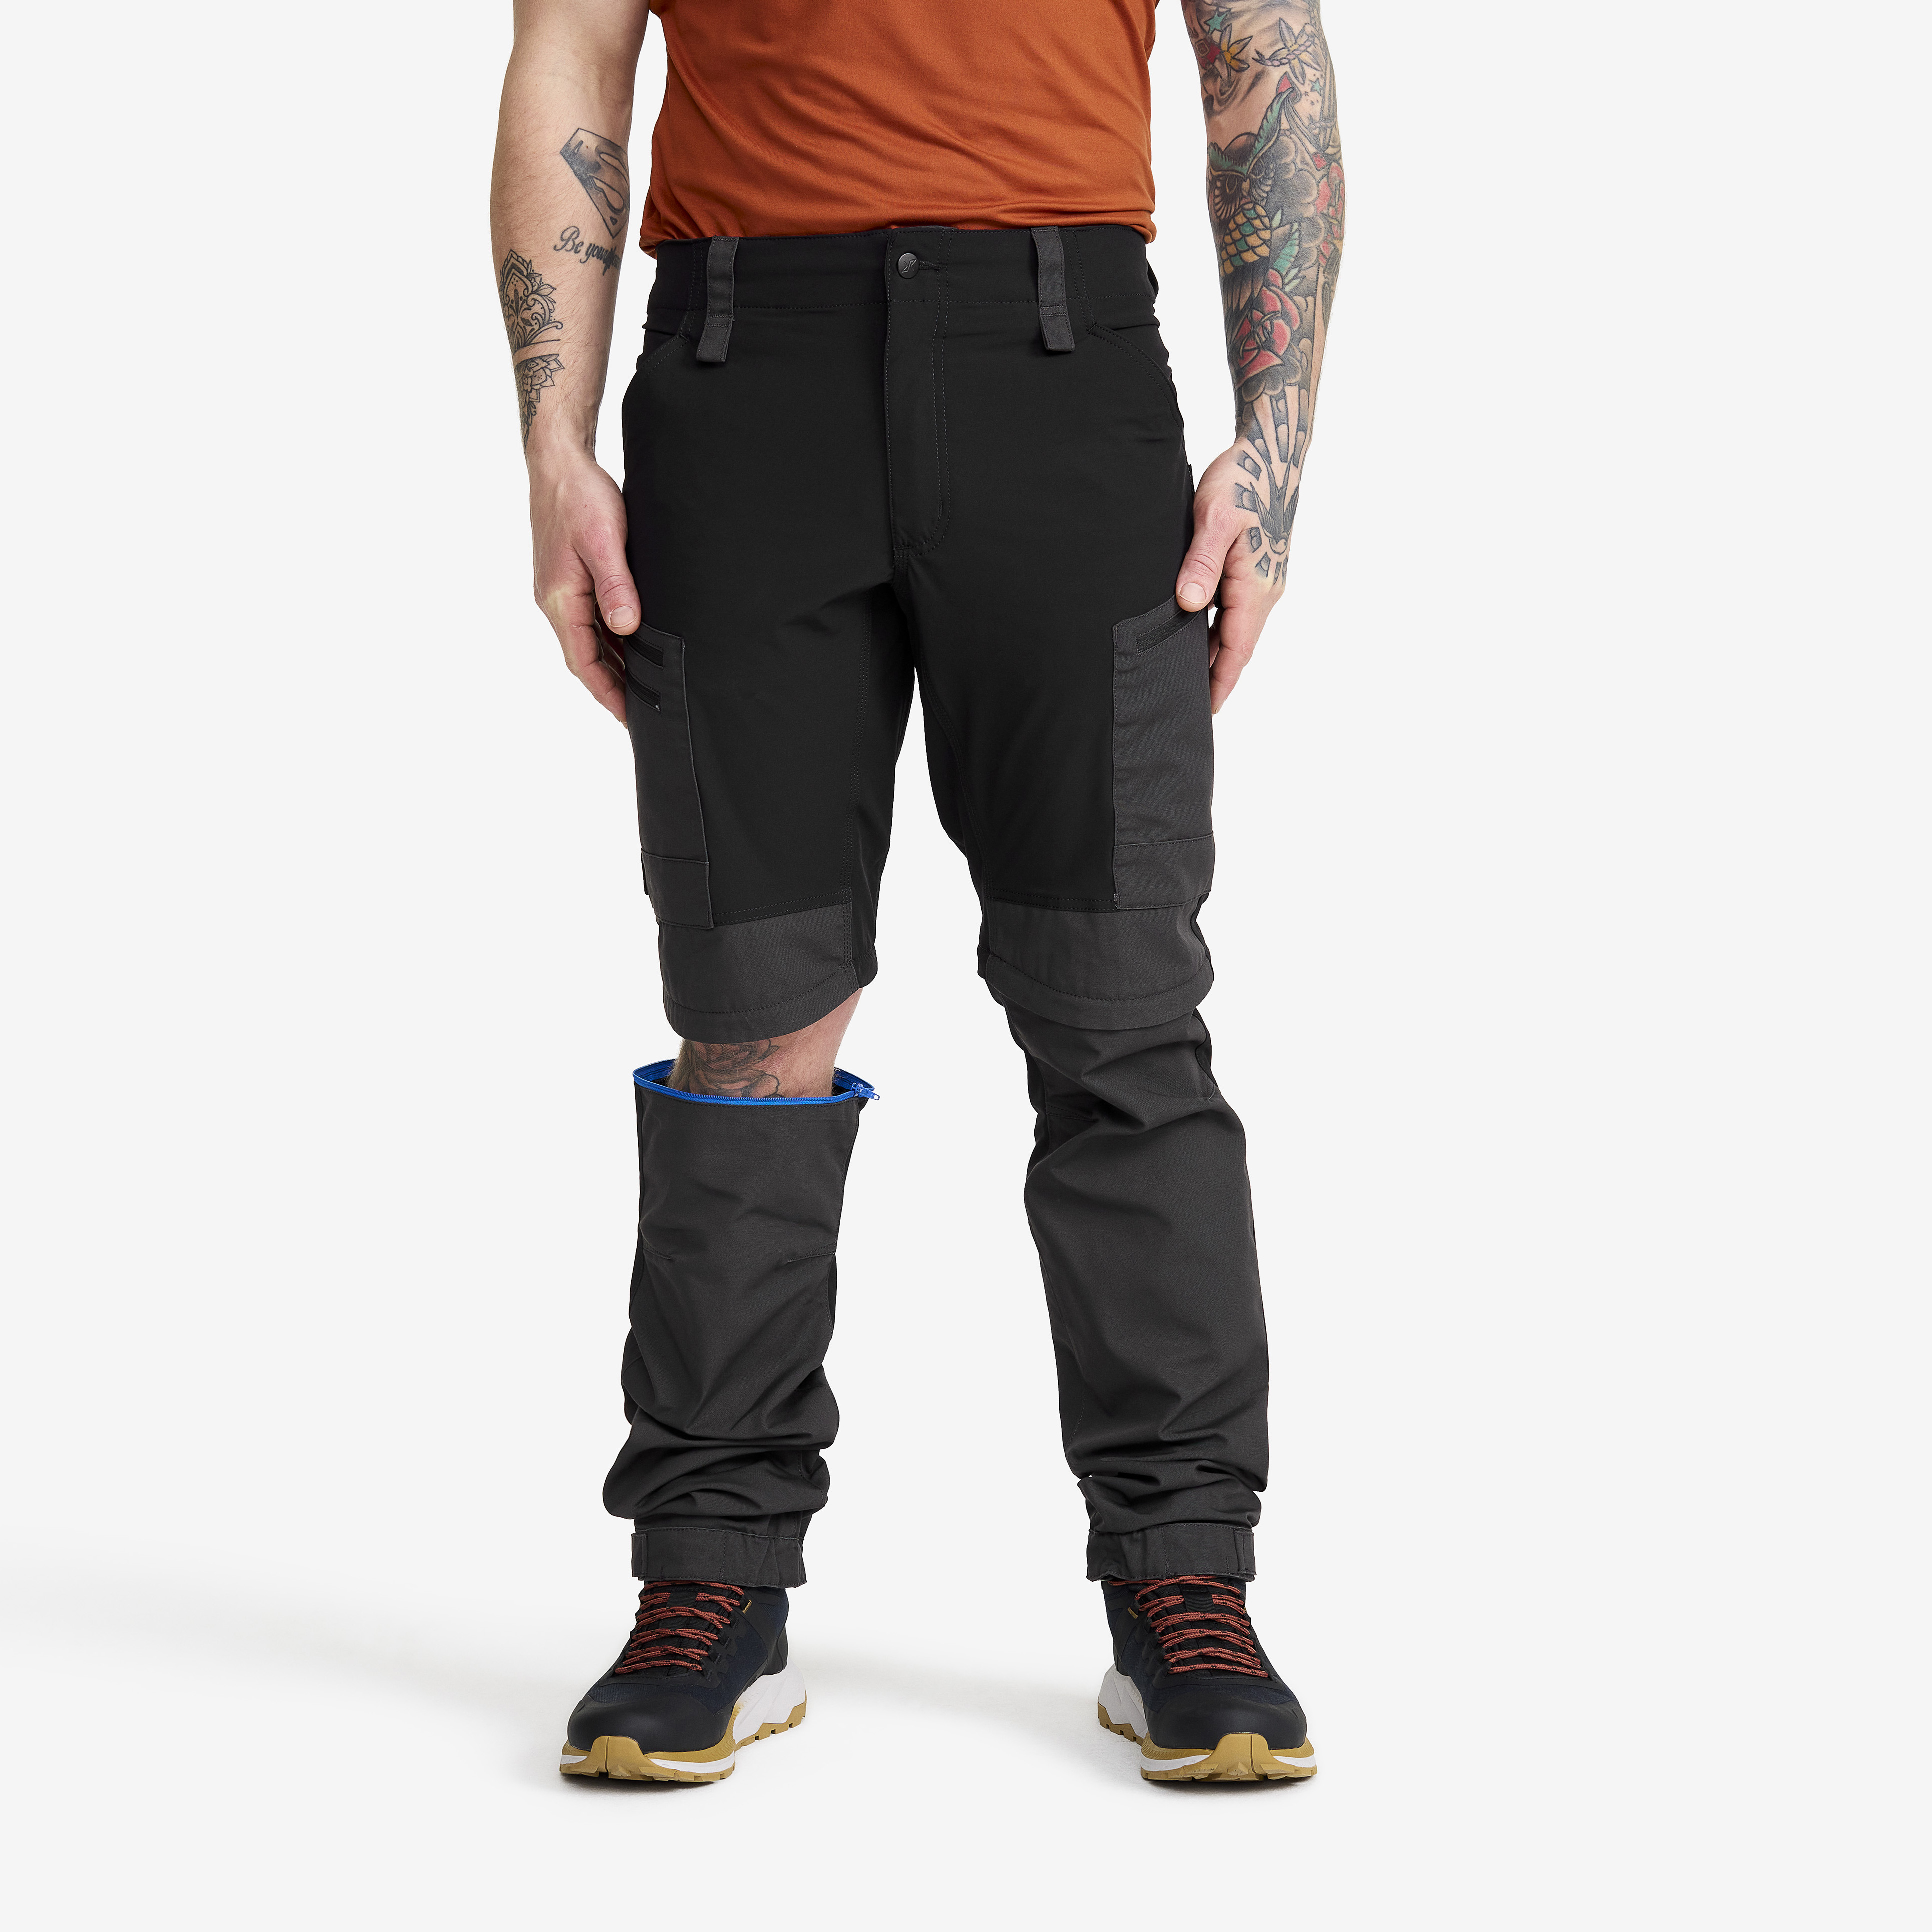 RVRC GP Pro Zip-off hiking trousers for men in black